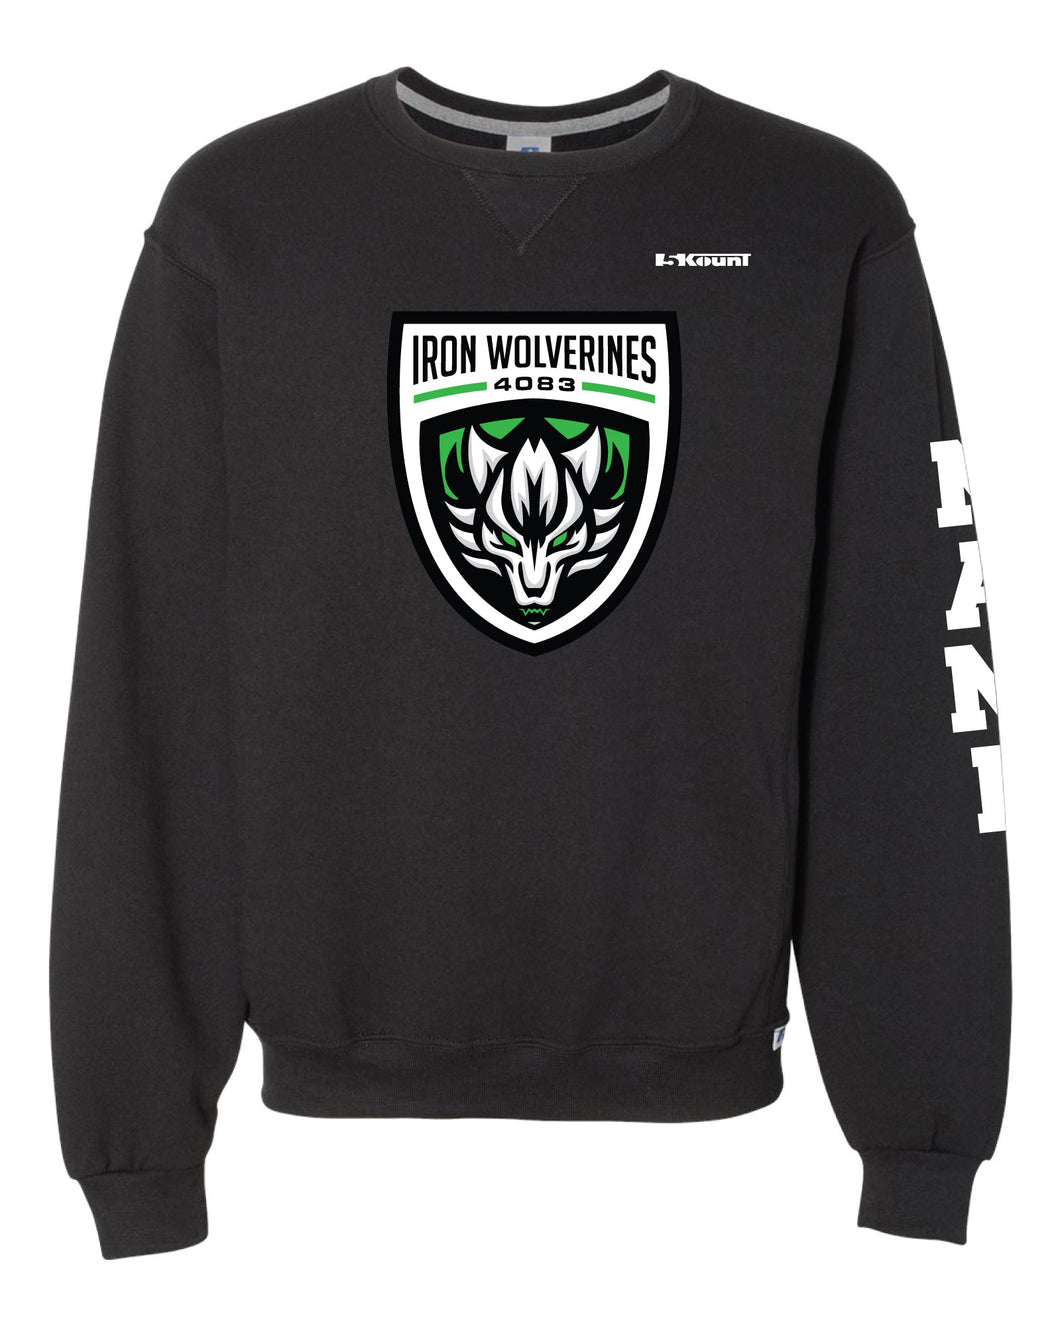 Iron Wolverines Russell Athletic Cotton Crewneck Sweatshirt - Black - 5KounT2018